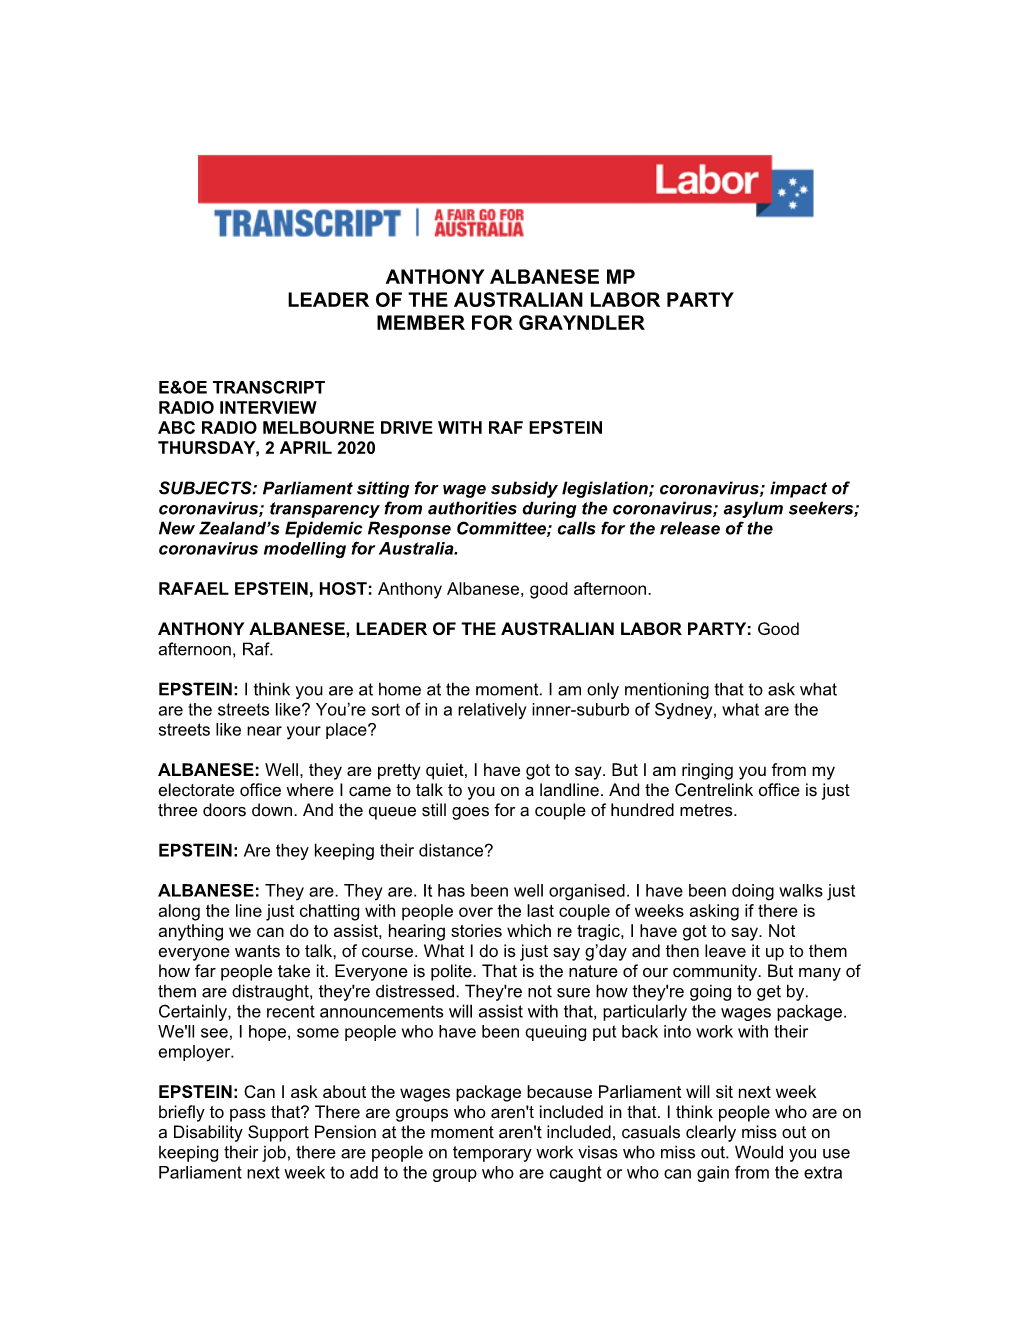 Anthony Albanese Mp Leader of the Australian Labor Party Member for Grayndler